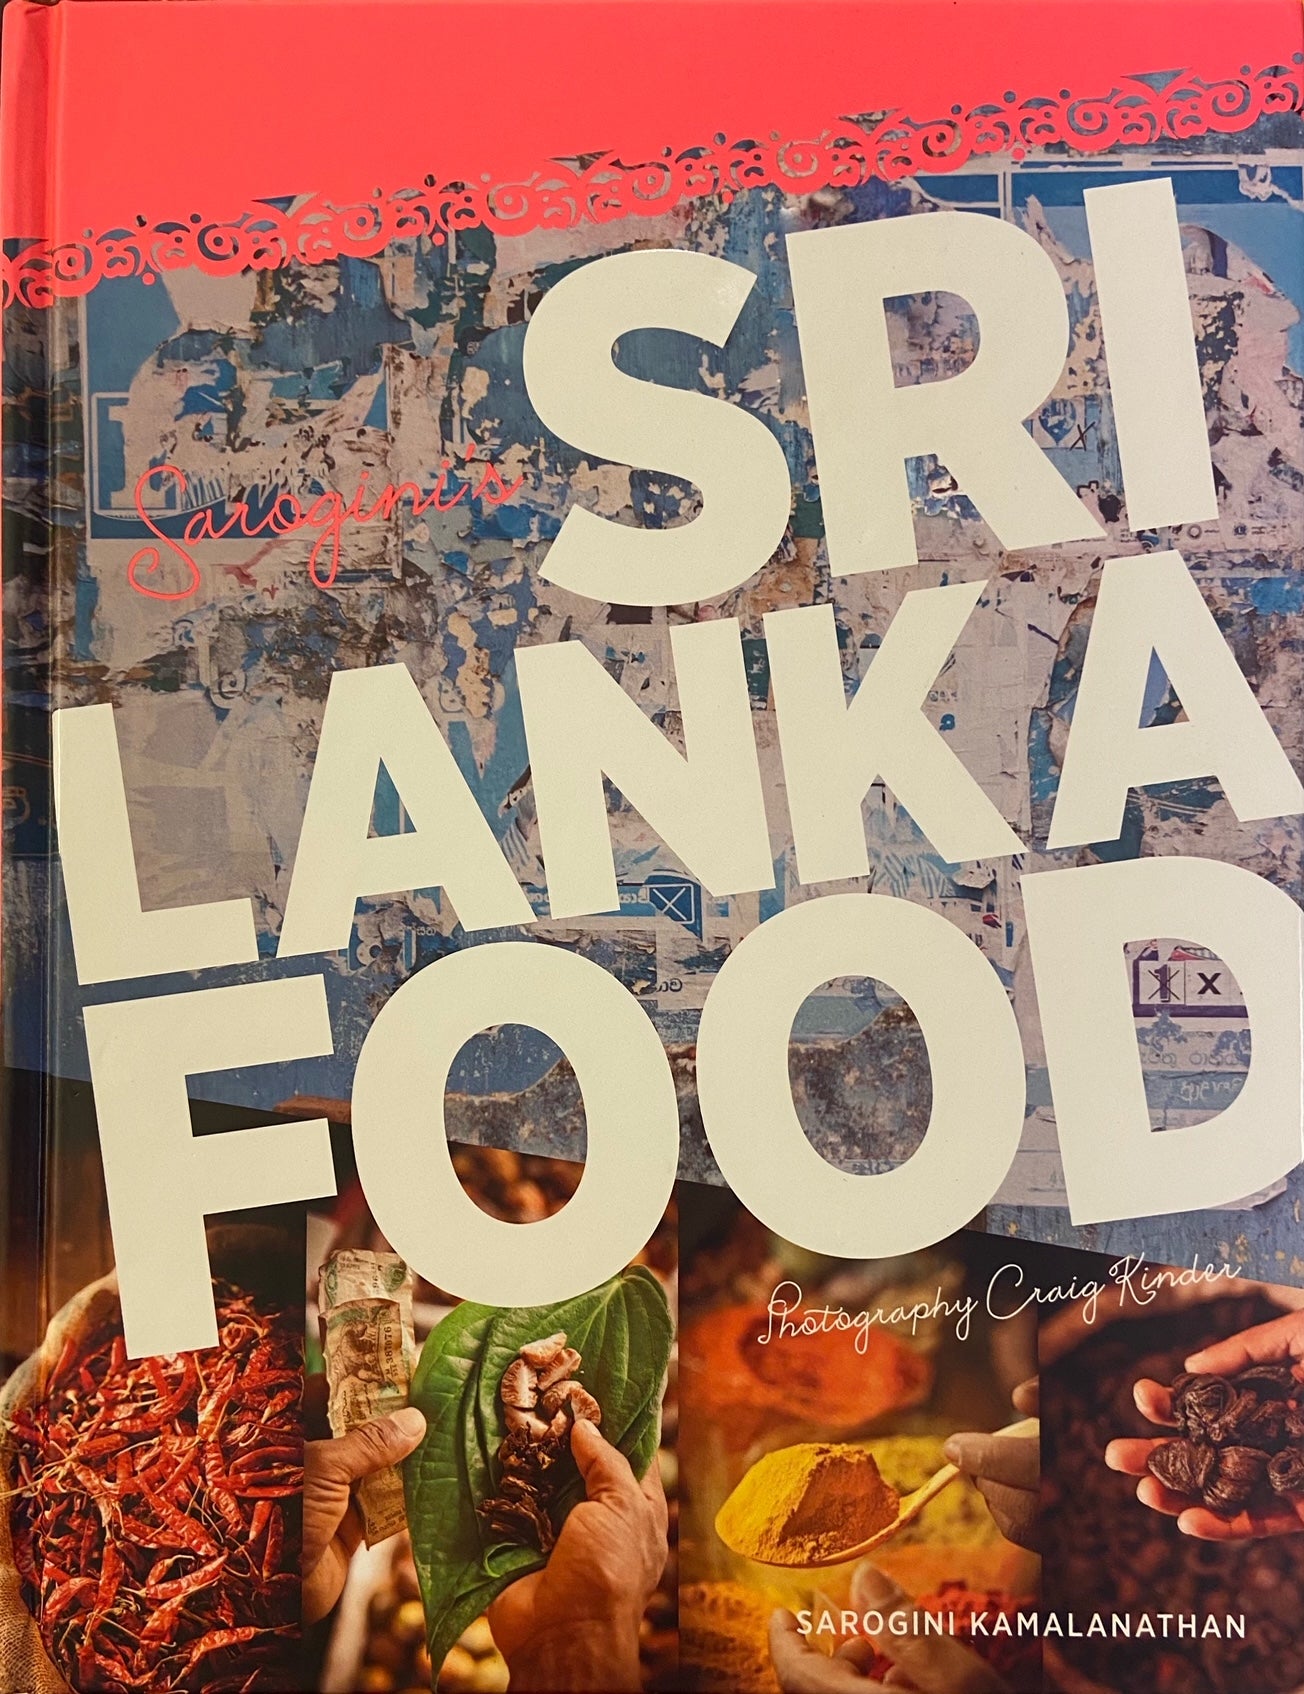 Sri Lanka Food by Sarogini Kamalanathan